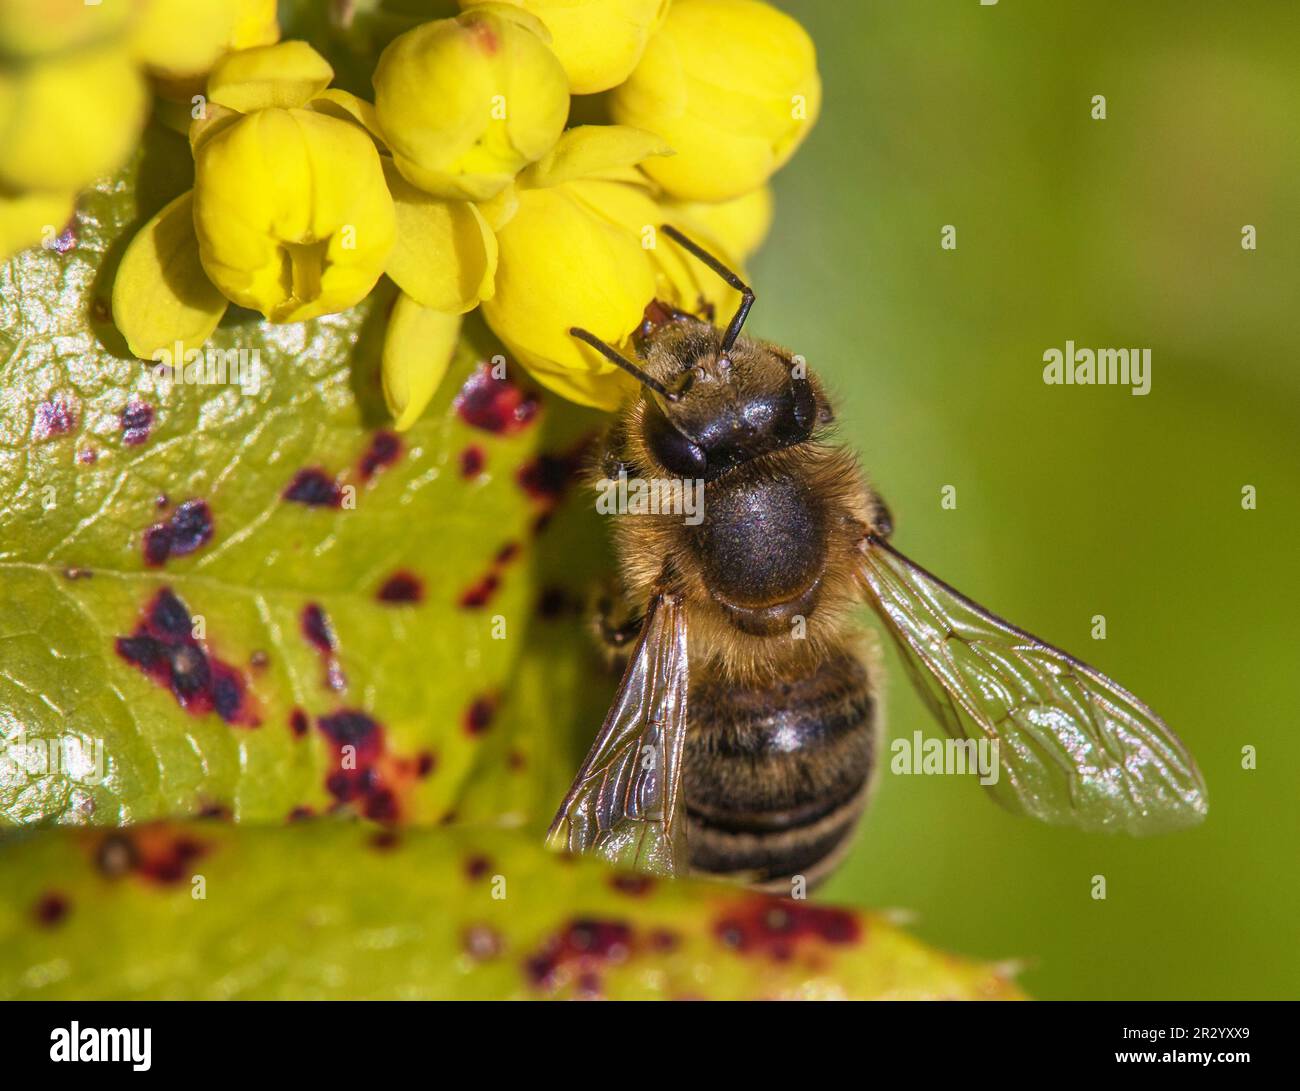 detail of bee or honeybee in Latin Apis Mellifera, european or western honey bee sitting on the yellow flower Stock Photo